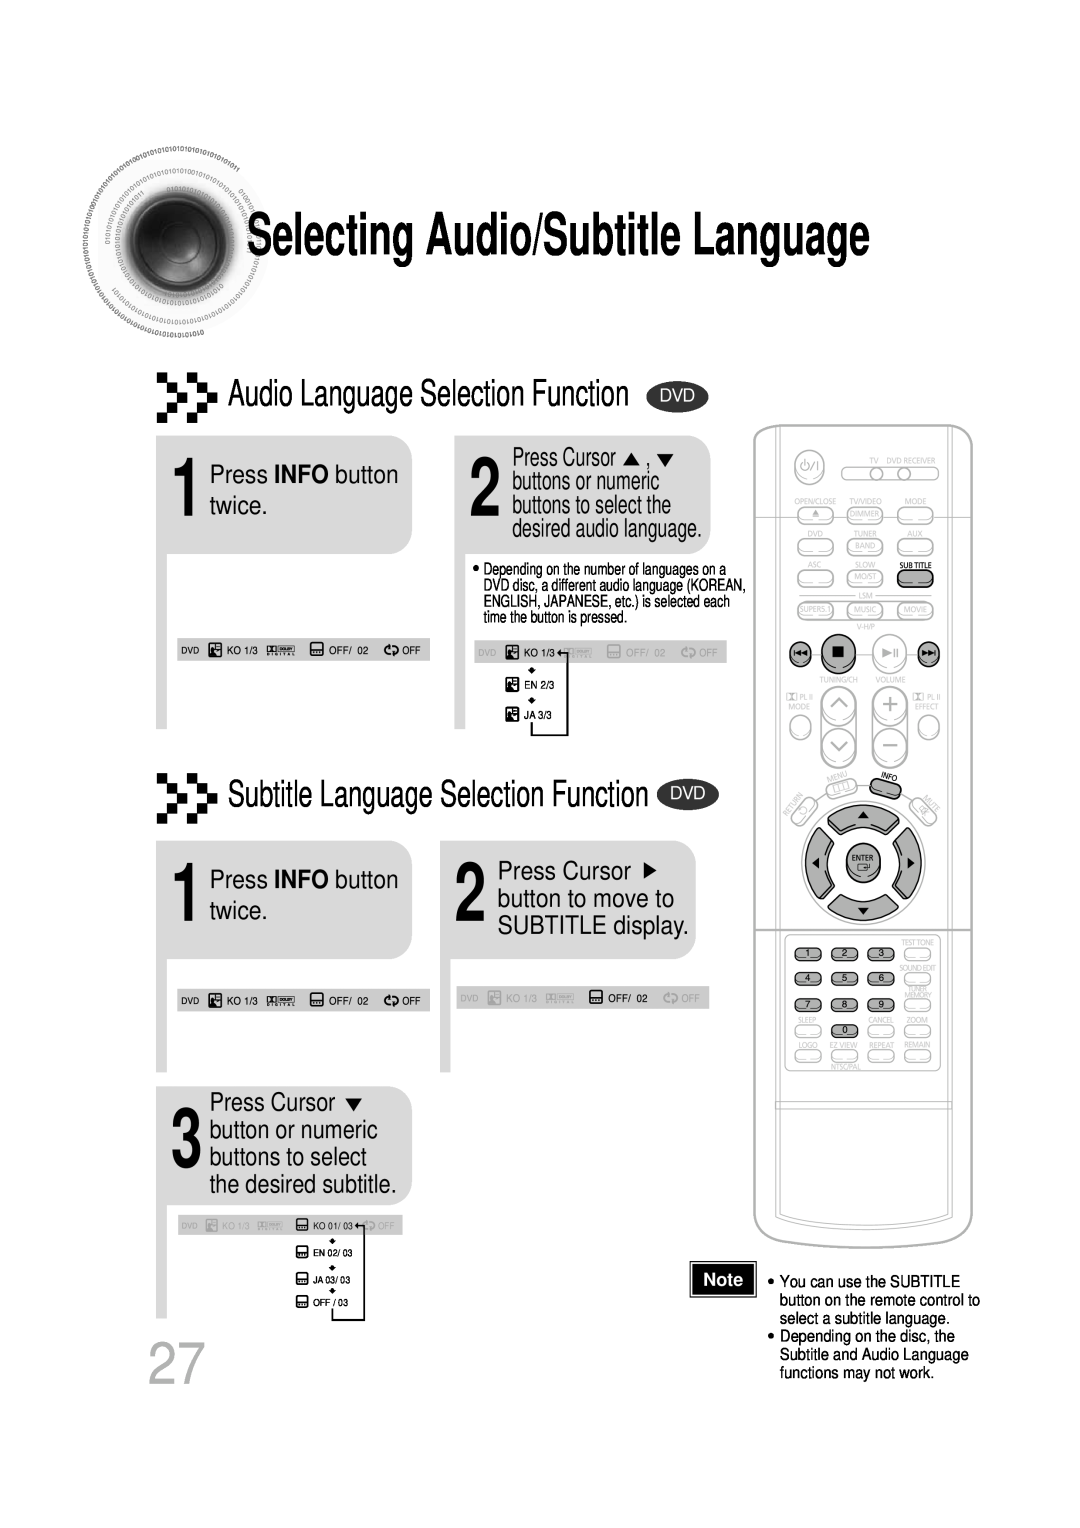 Samsung HT-DB350 SelectingAudio/Subtitle Language, Audio Language Selection Function DVD, 1Press INFO button twice, KO 1/3 